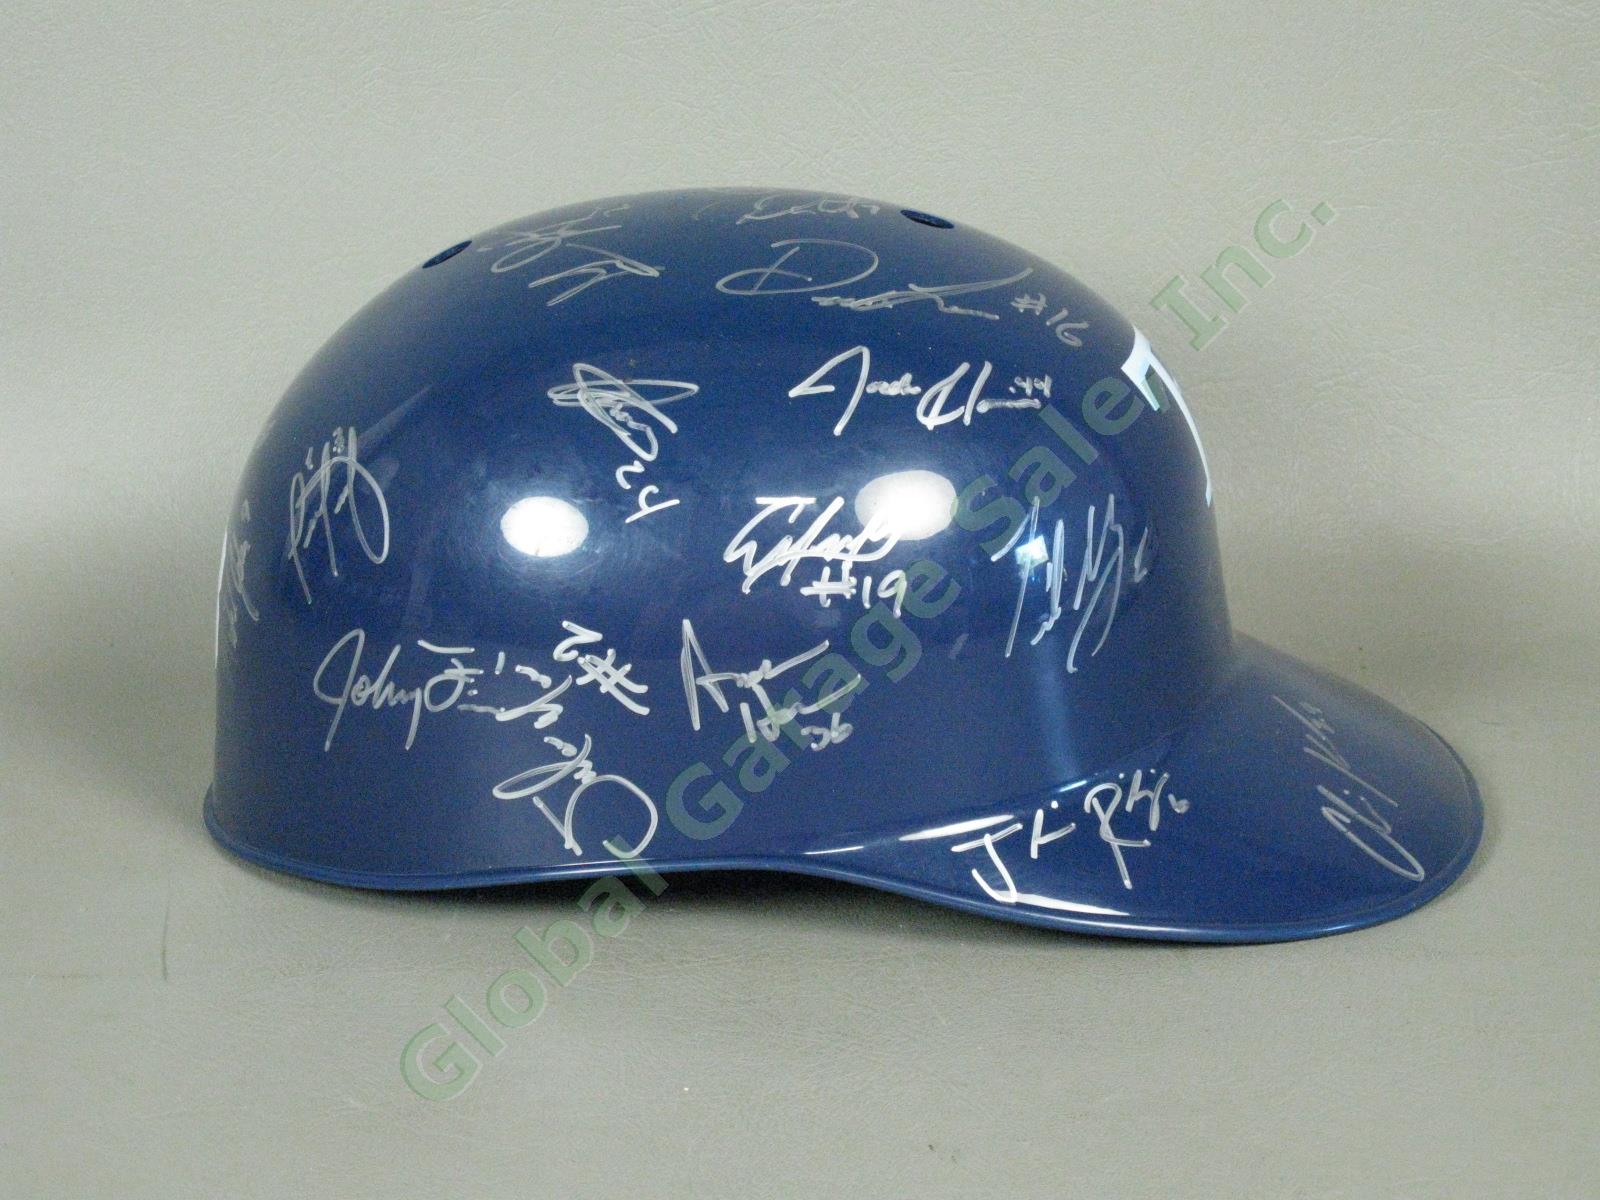 2013 Hudson Valley Renegades Team Signed Baseball Helmet NYPL Tampa Bay Rays NR 1